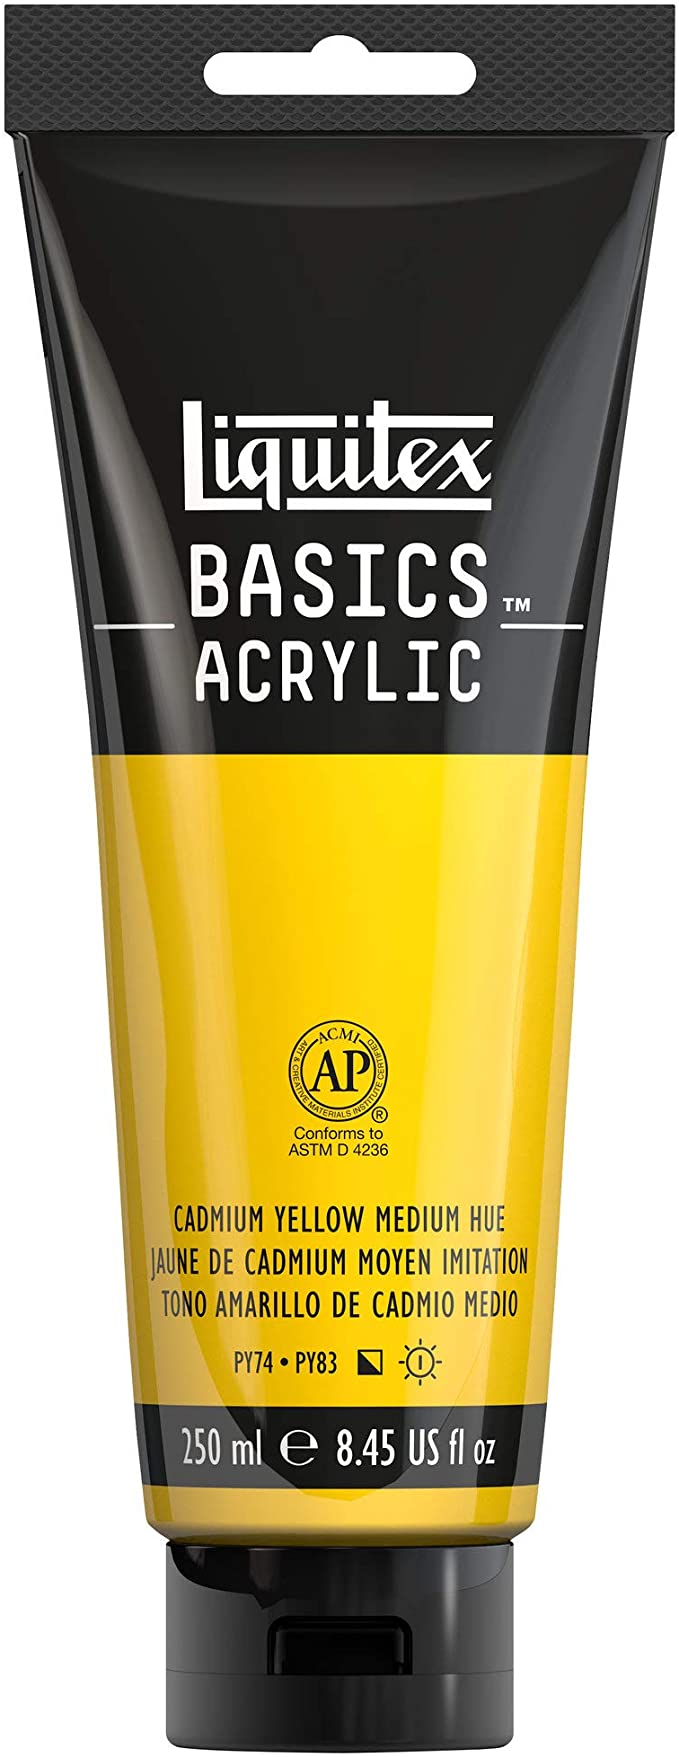 Liquitex BASICS Acrylic Paint, 8.45-oz tube, Cadmium Yellow Medium Hue